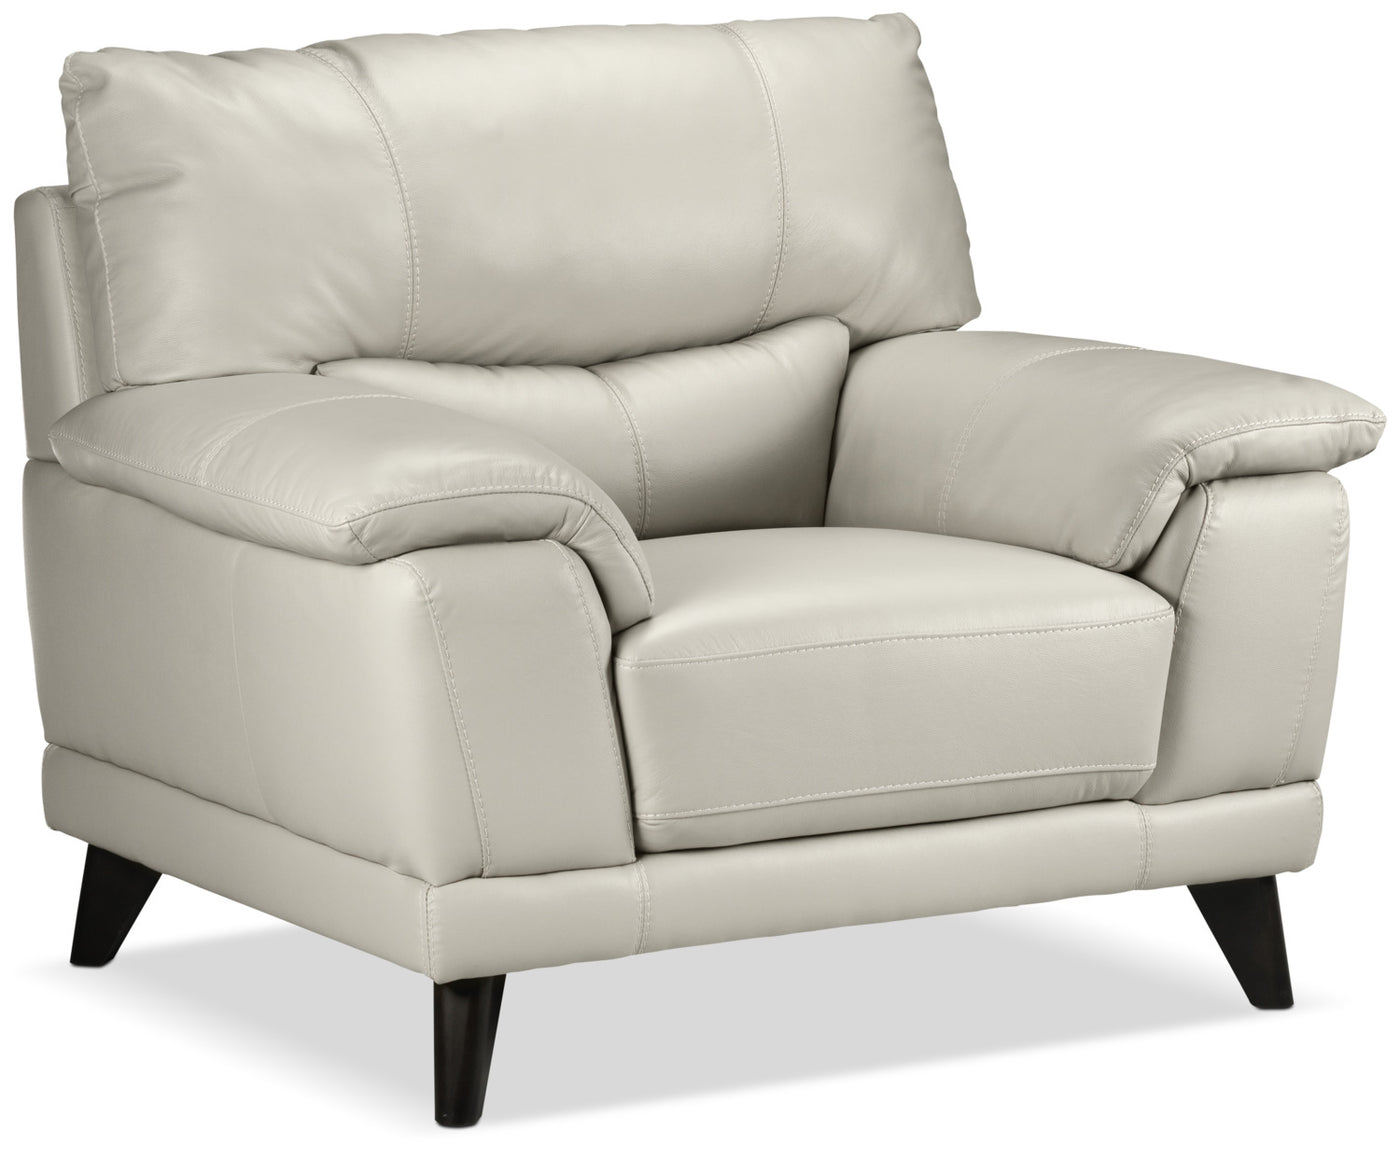 Braylon Leather Chair - Silver Grey